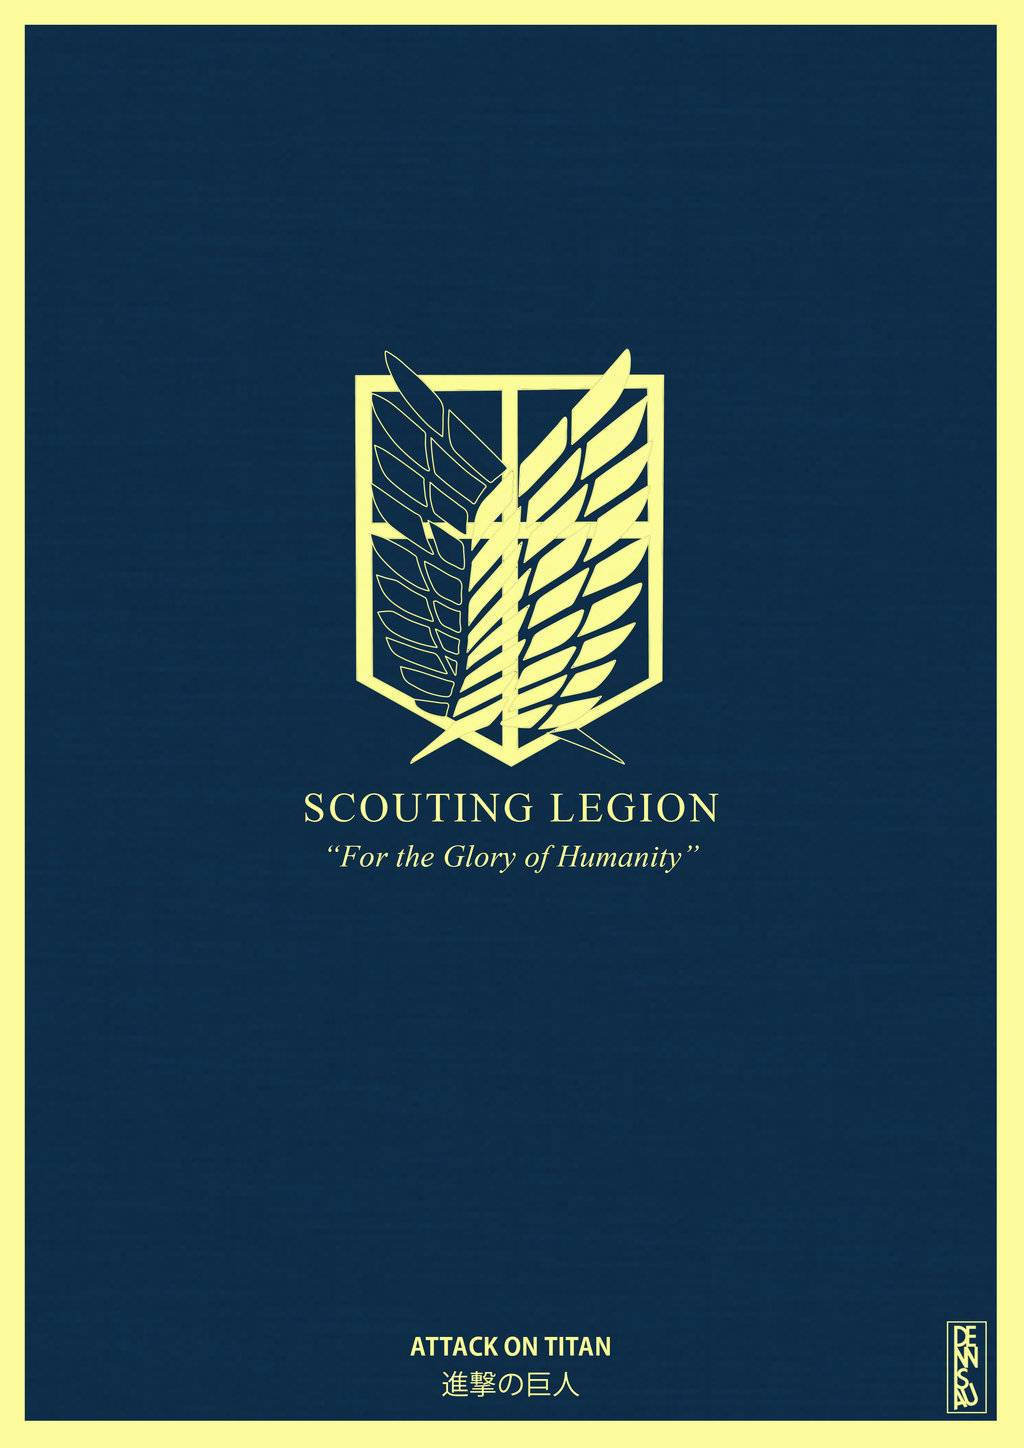 Scouting Legion Logo Attack On Titan Iphone Background